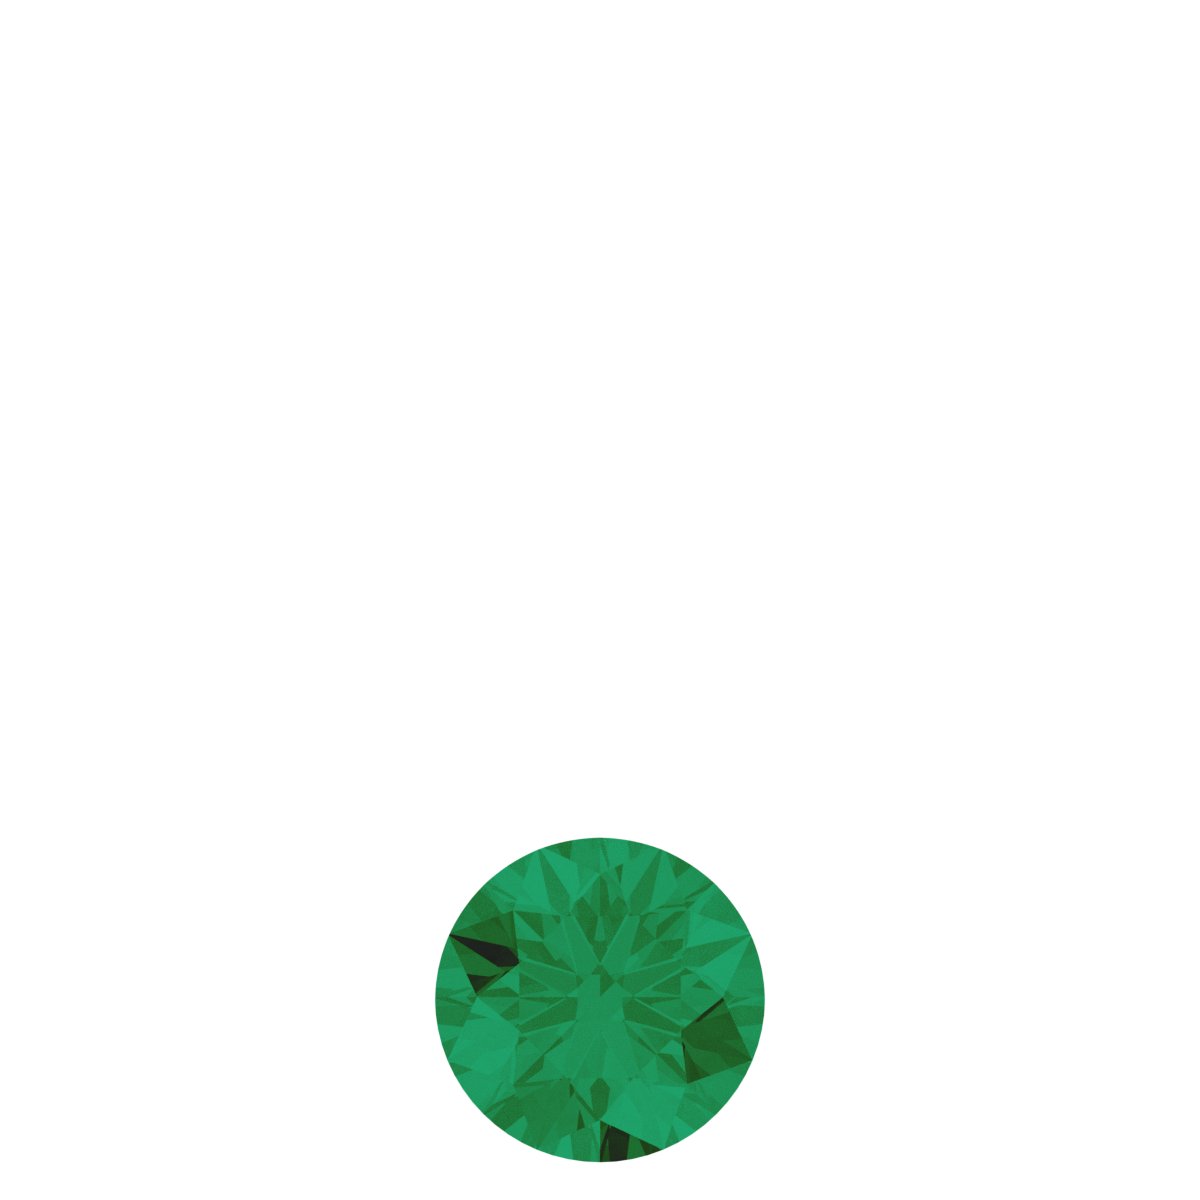 14K Yellow Lab-Grown Emerald Charm/Pendant